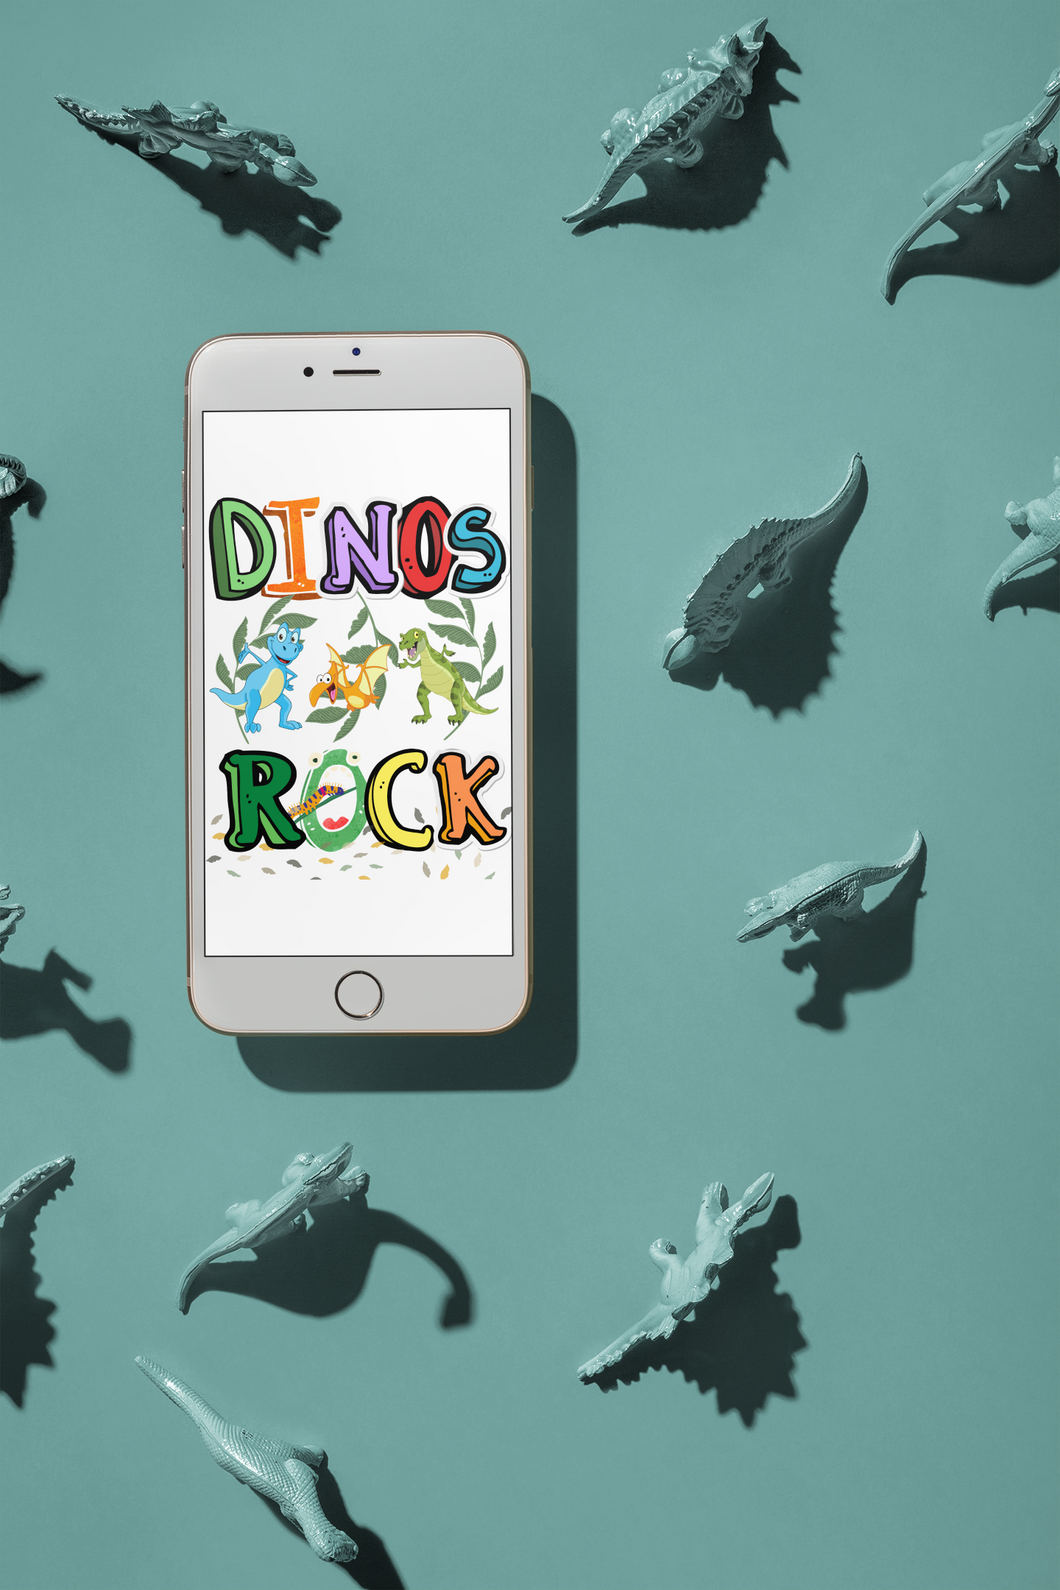 Waterproof Dinosaur Stickers - Dinos Rock 1.7